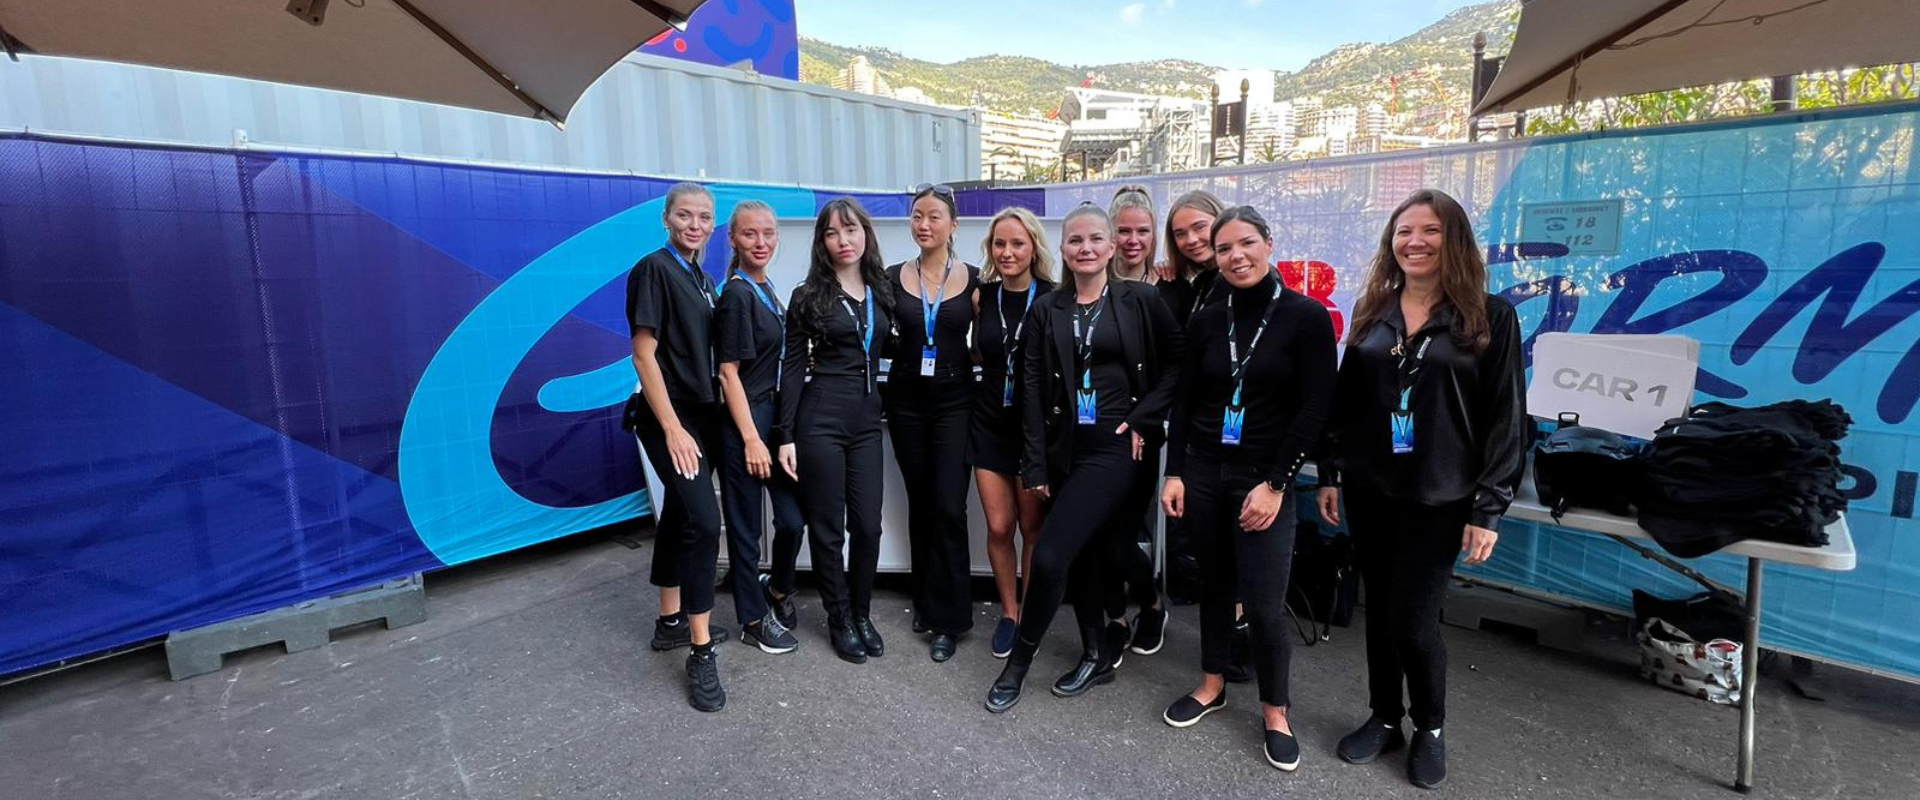 Monaco Hostess Agency and Motorsport Staff